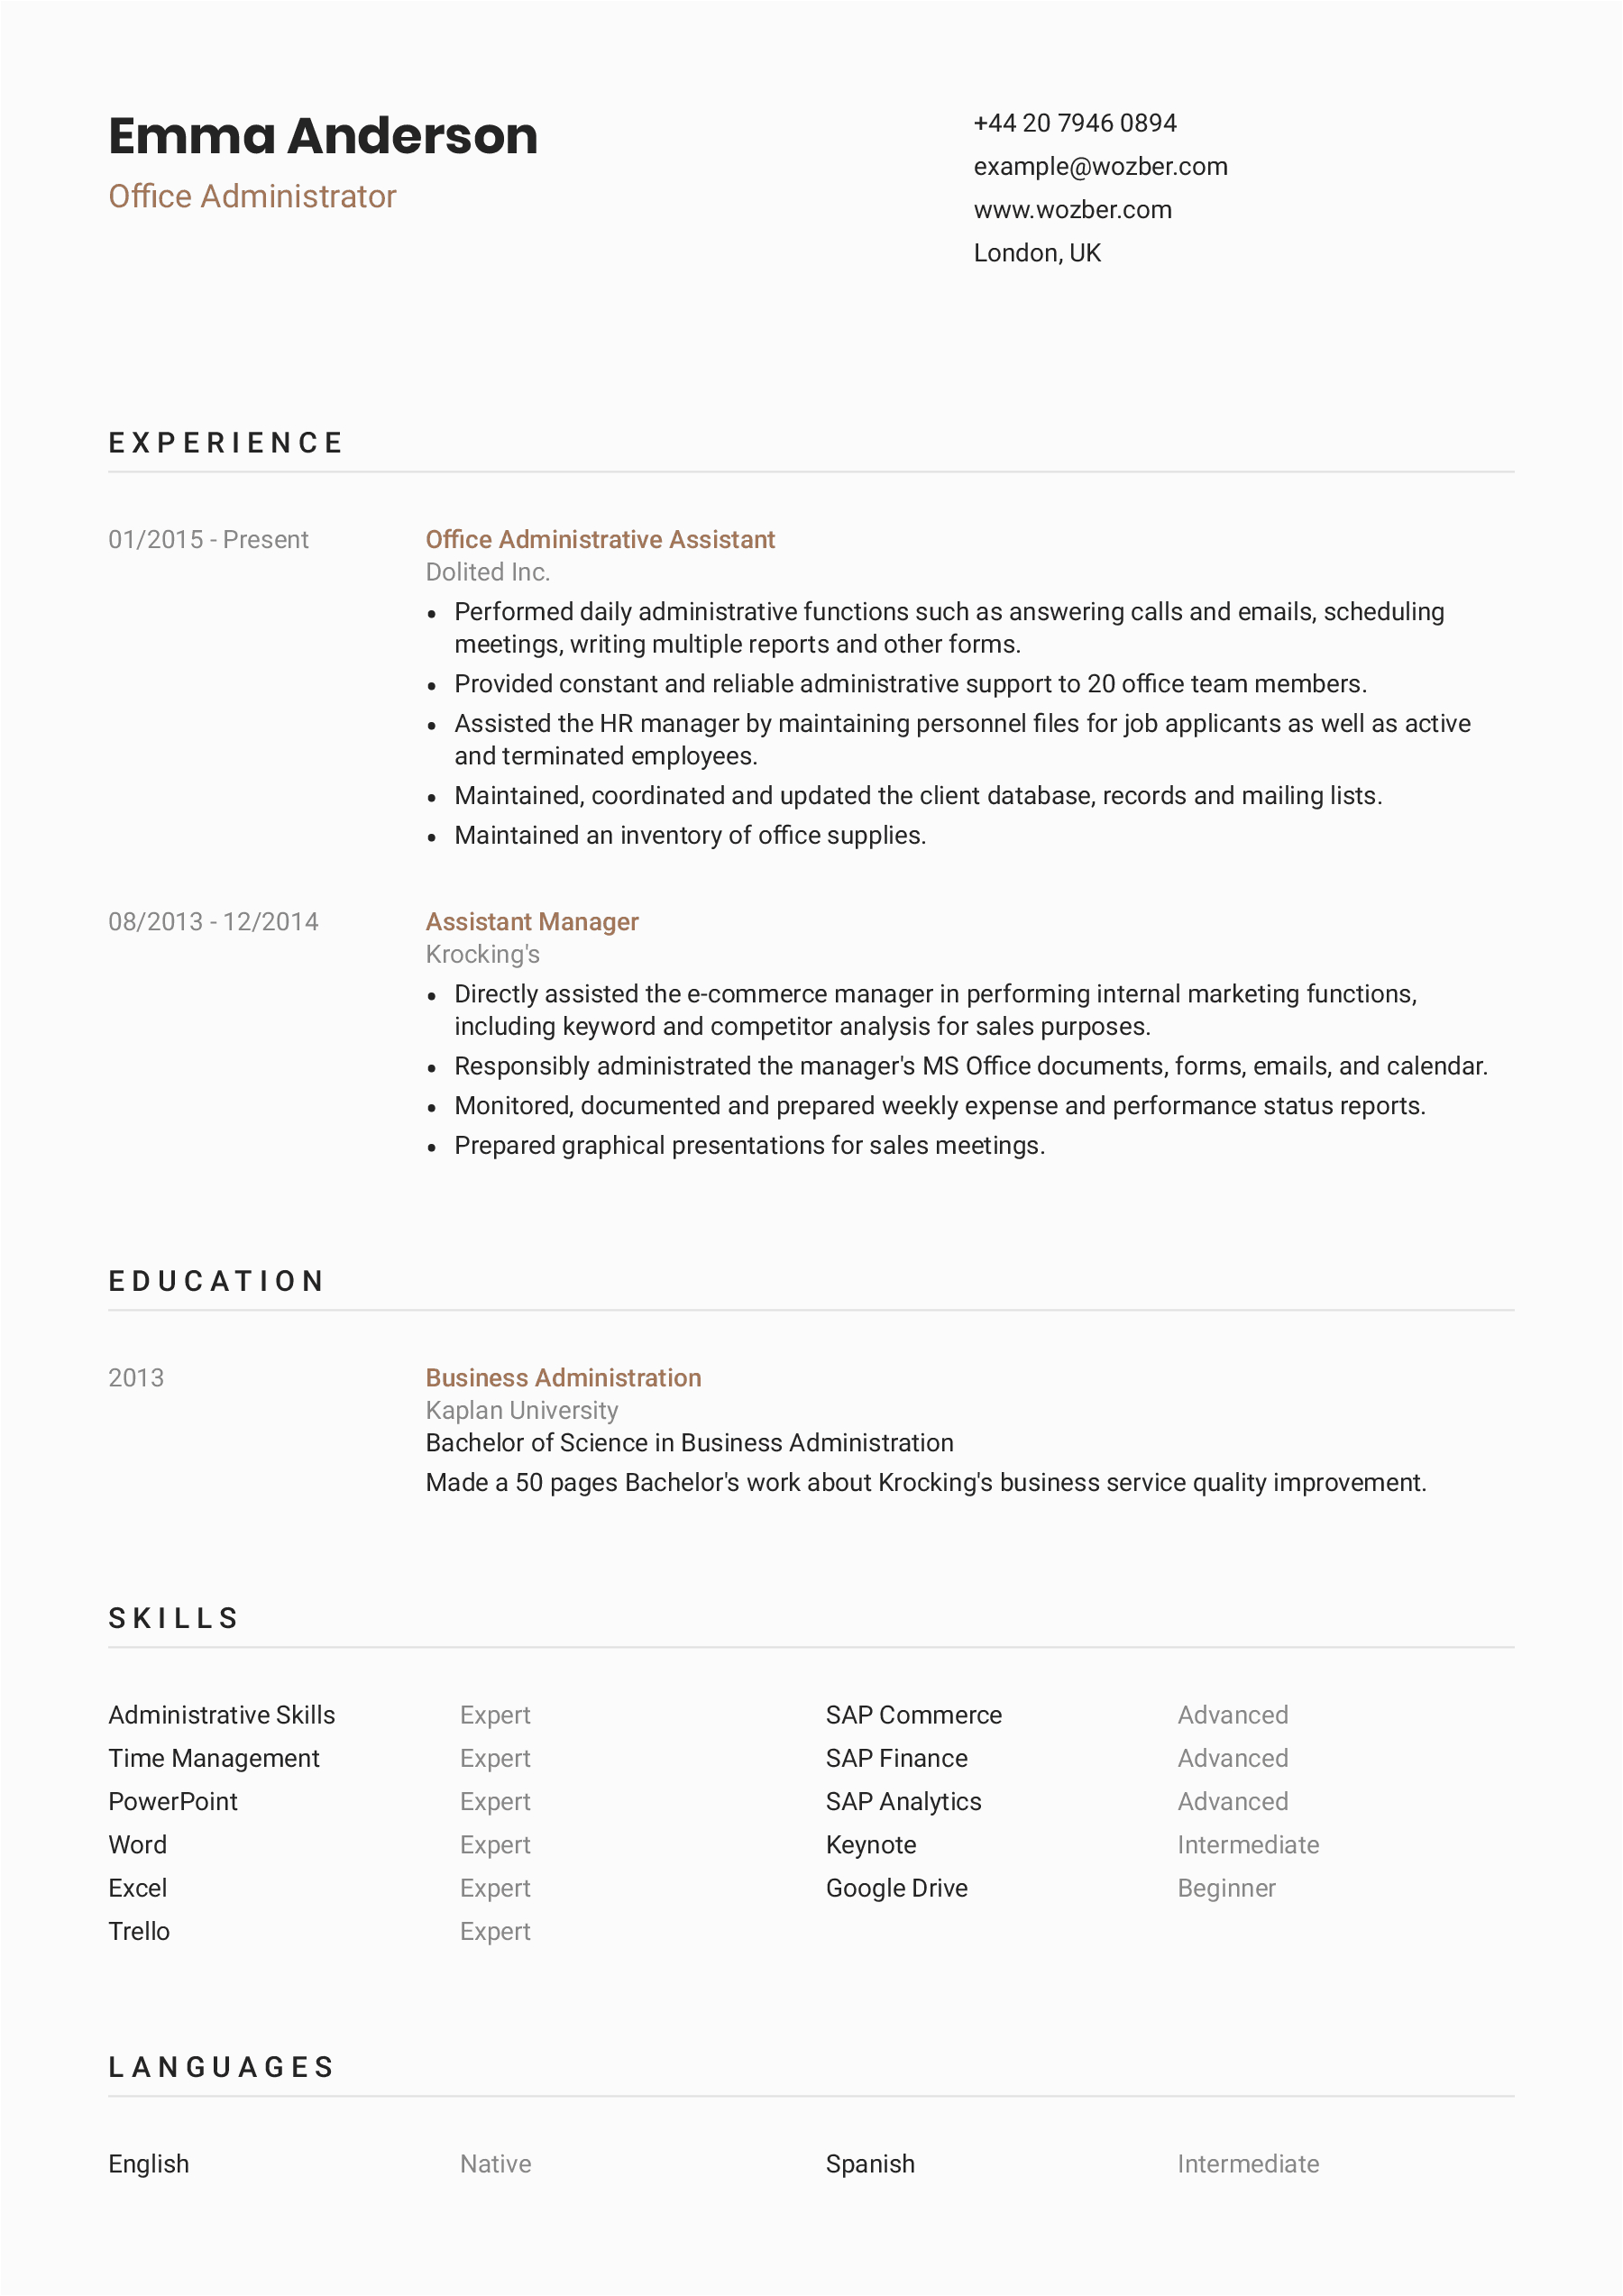 Sample Resume for Office Administration Job Fice Administrator Resume Example